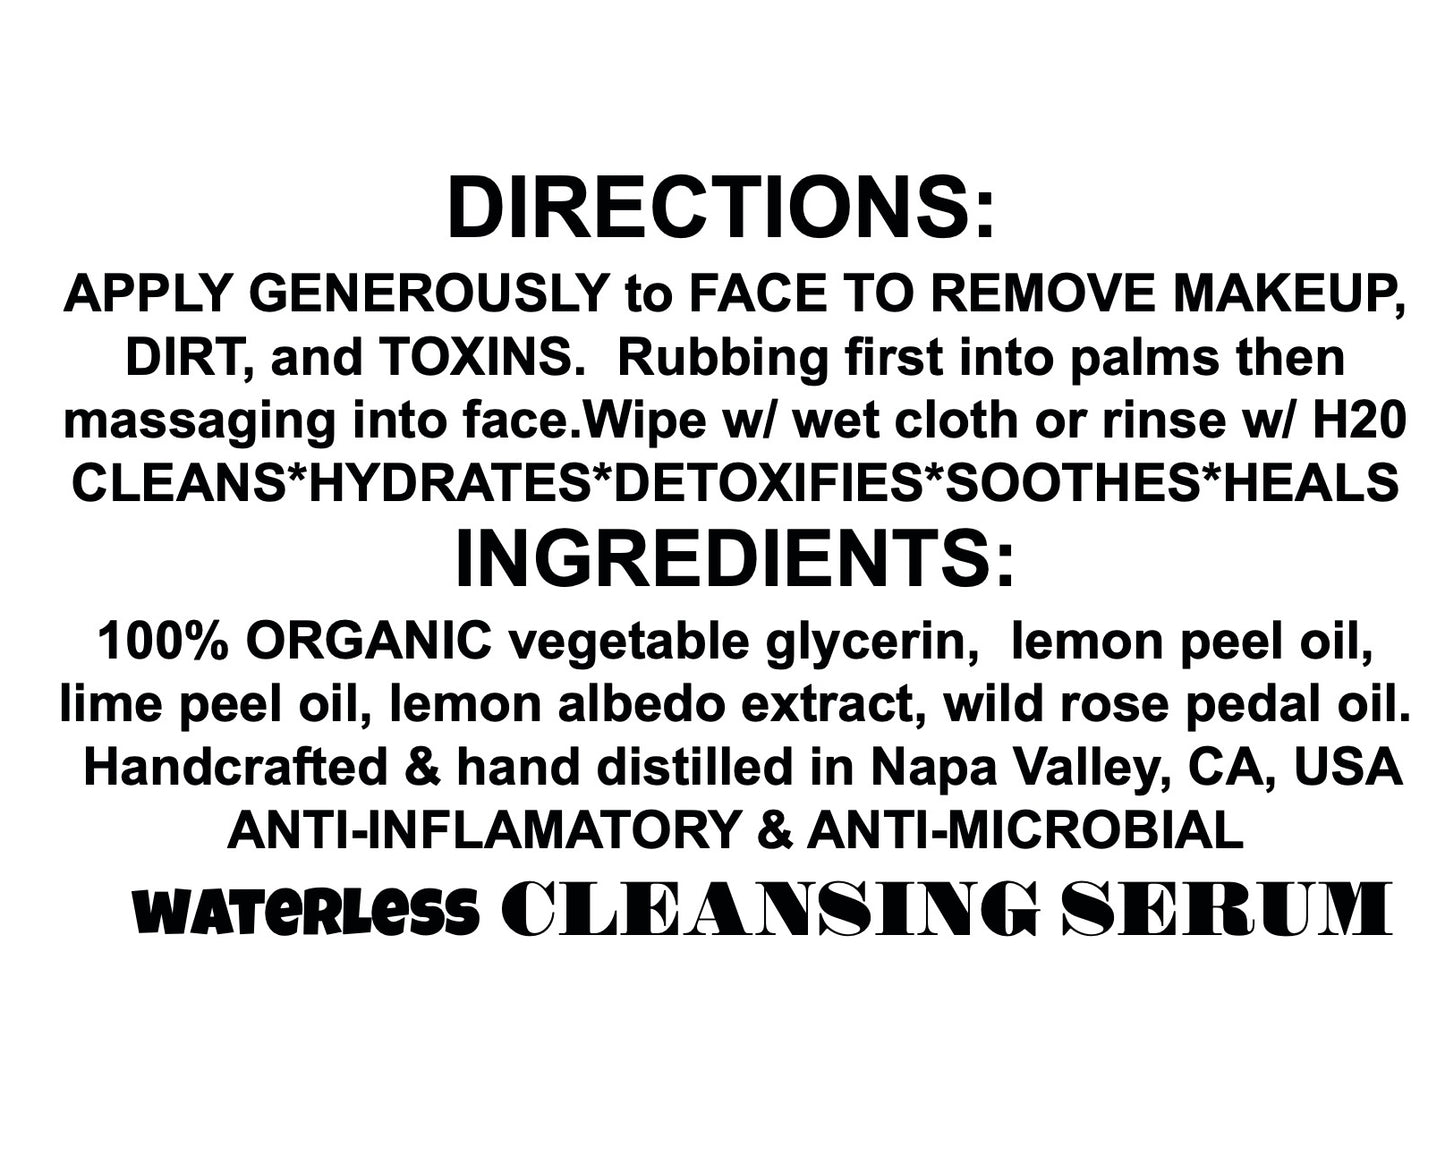 Waterless Cleanser & Skin Treatment